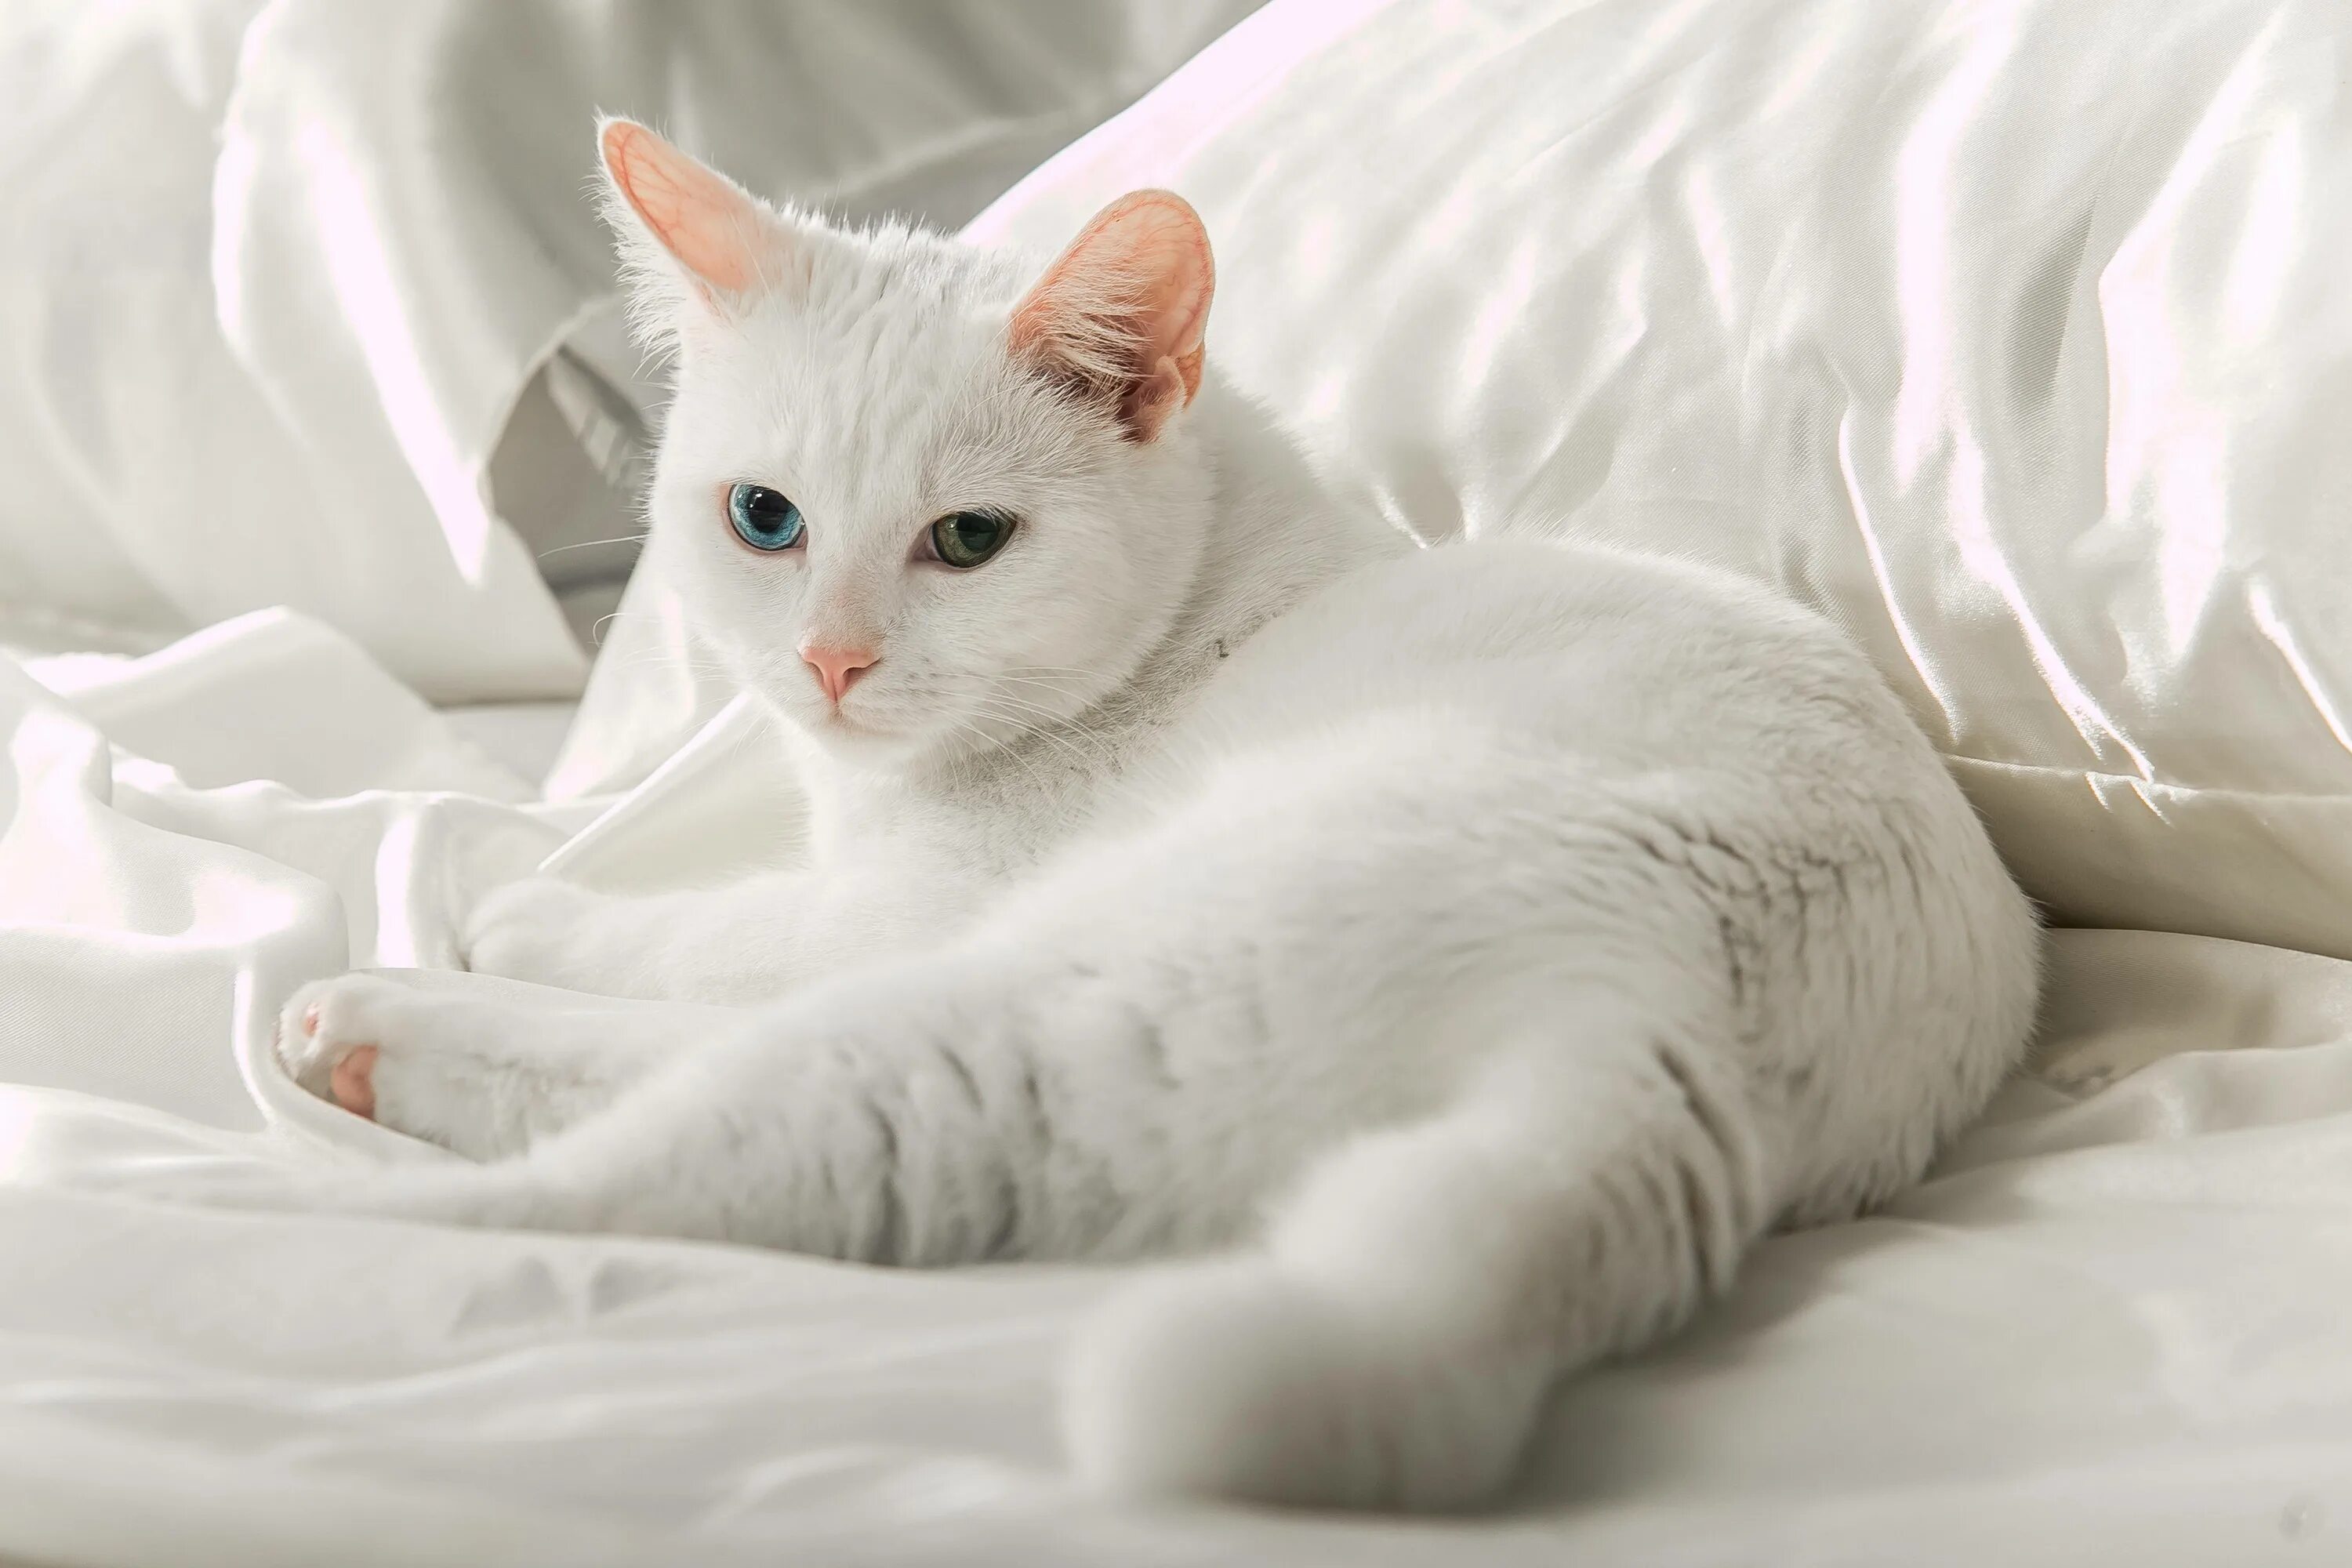 Турецкая ангора кошка. Турецкая ангора кошка короткошерстная. Турецкая ангора белая. Анатолийская короткошерстная кошка белая. Белая киса